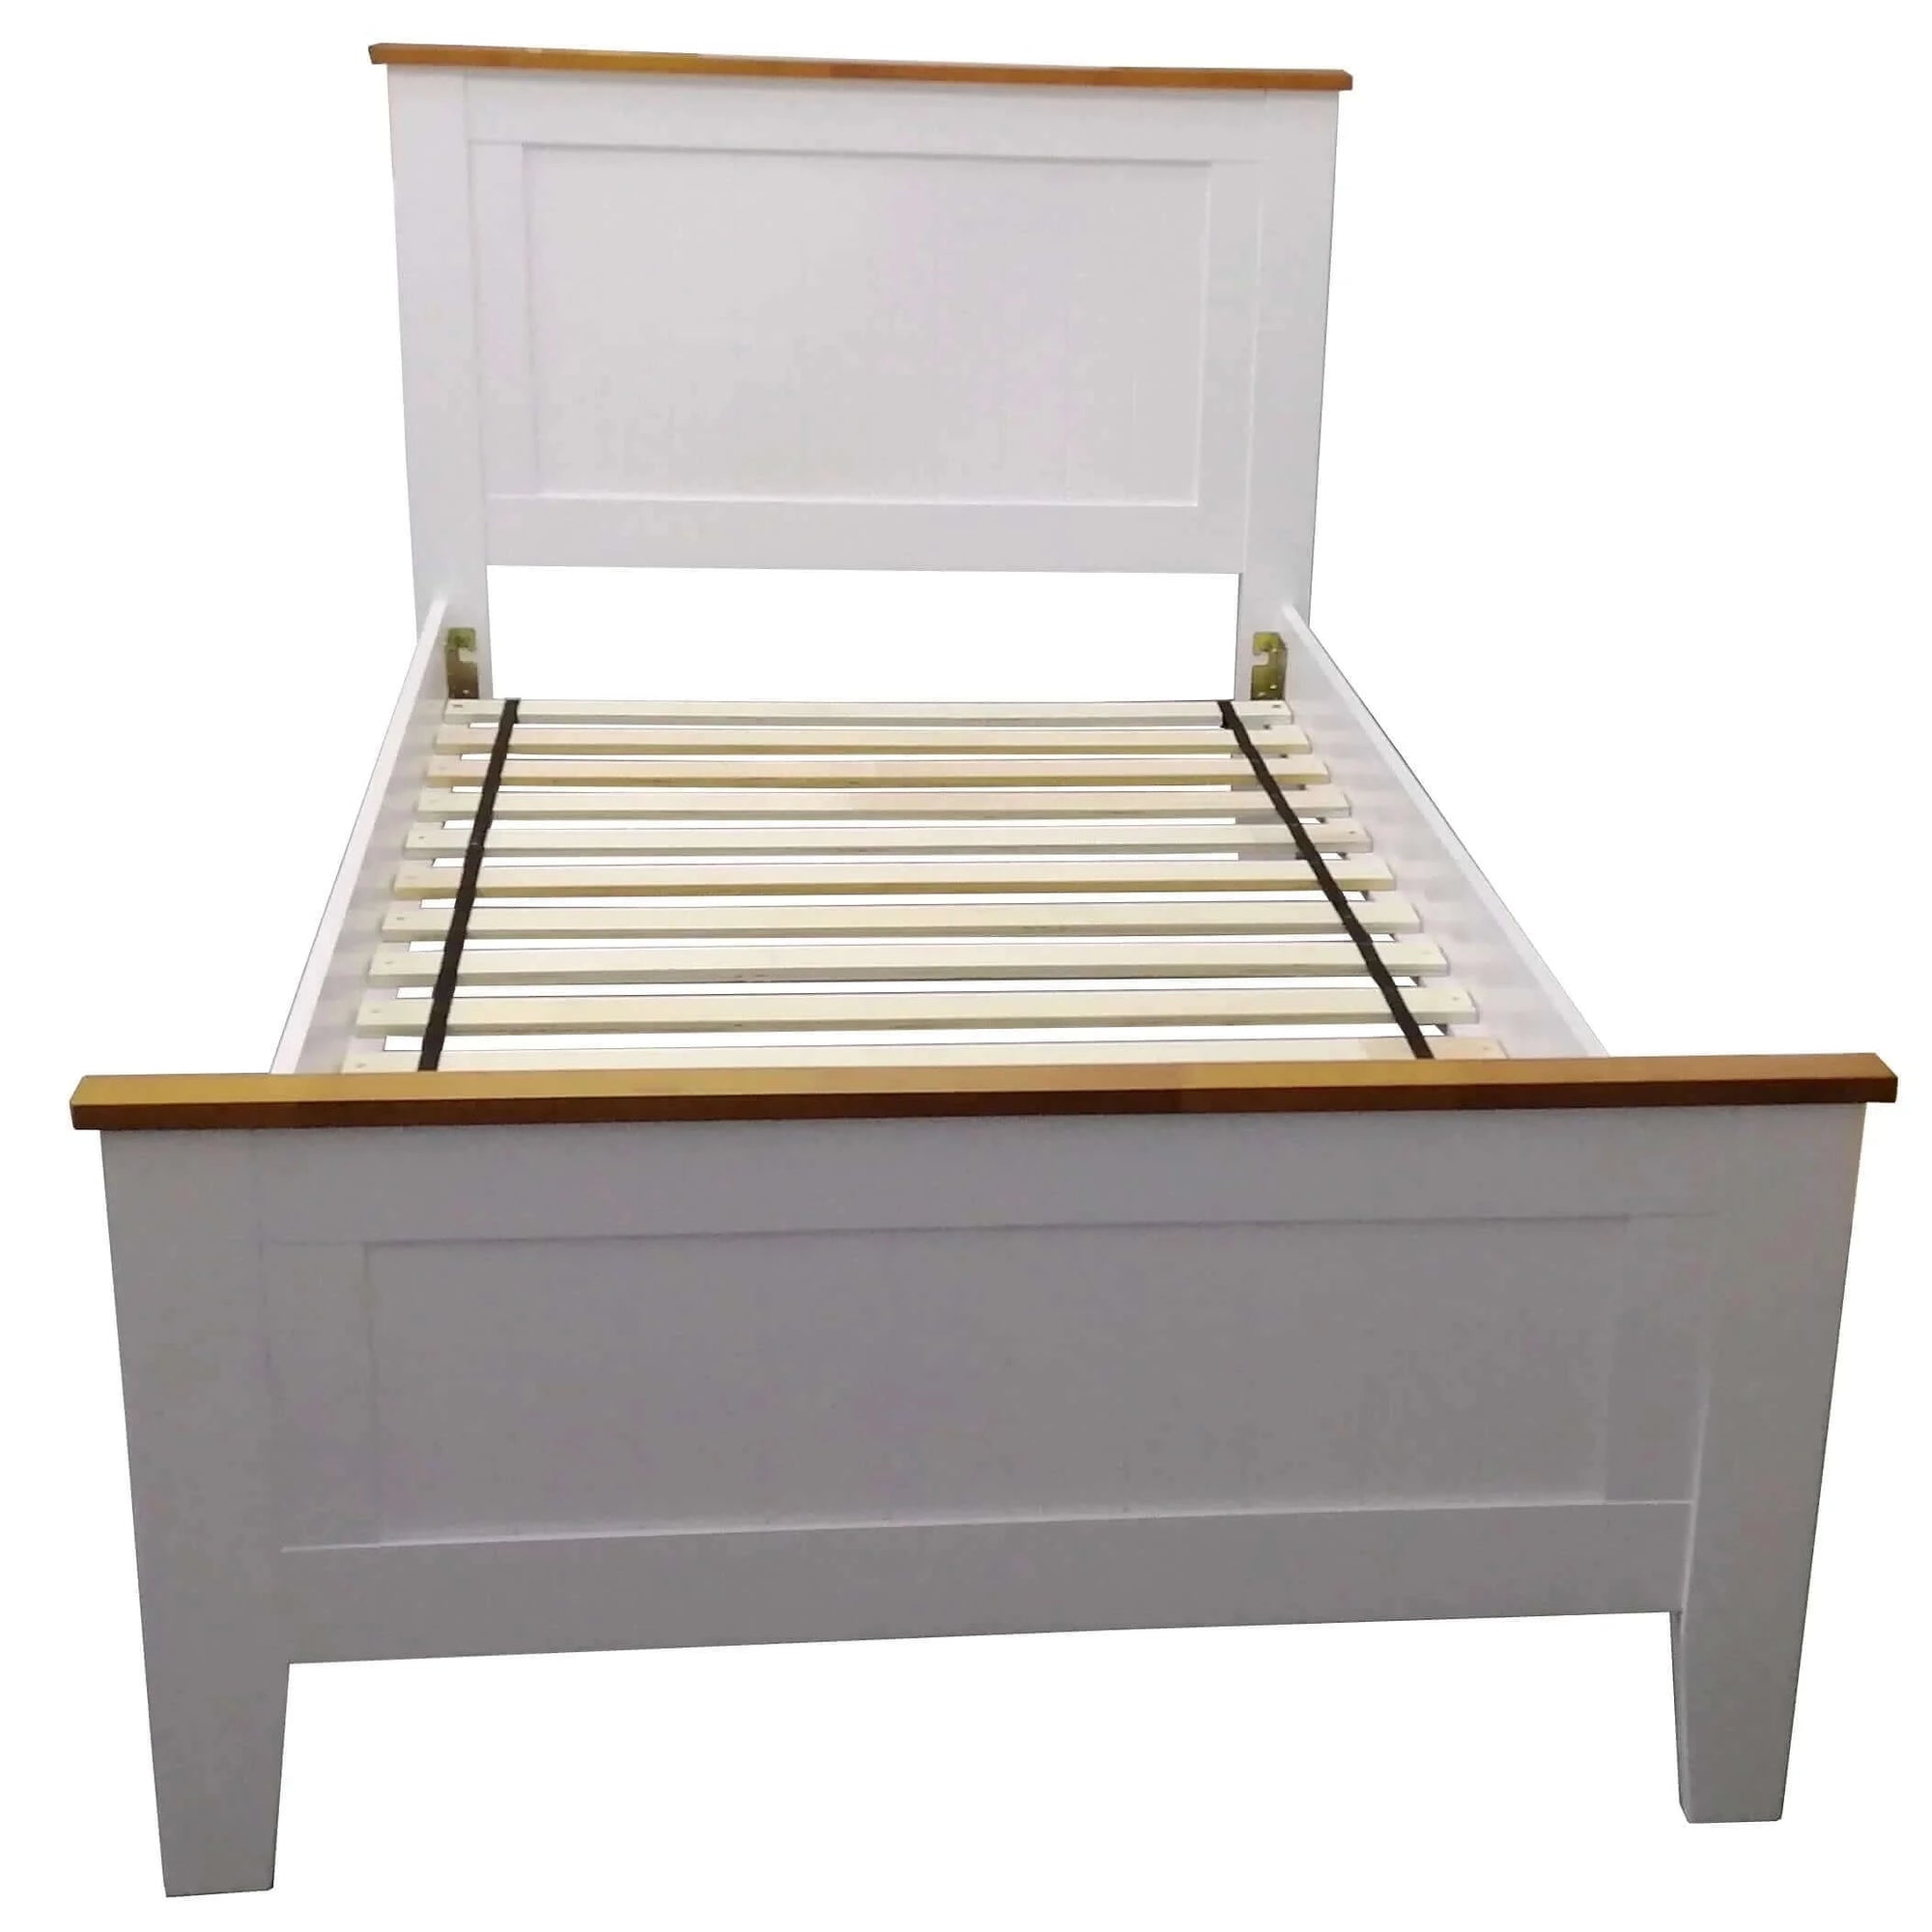 Buy lobelia bed frame king single size mattress base solid rubber timber wood -white - upinteriors-Upinteriors